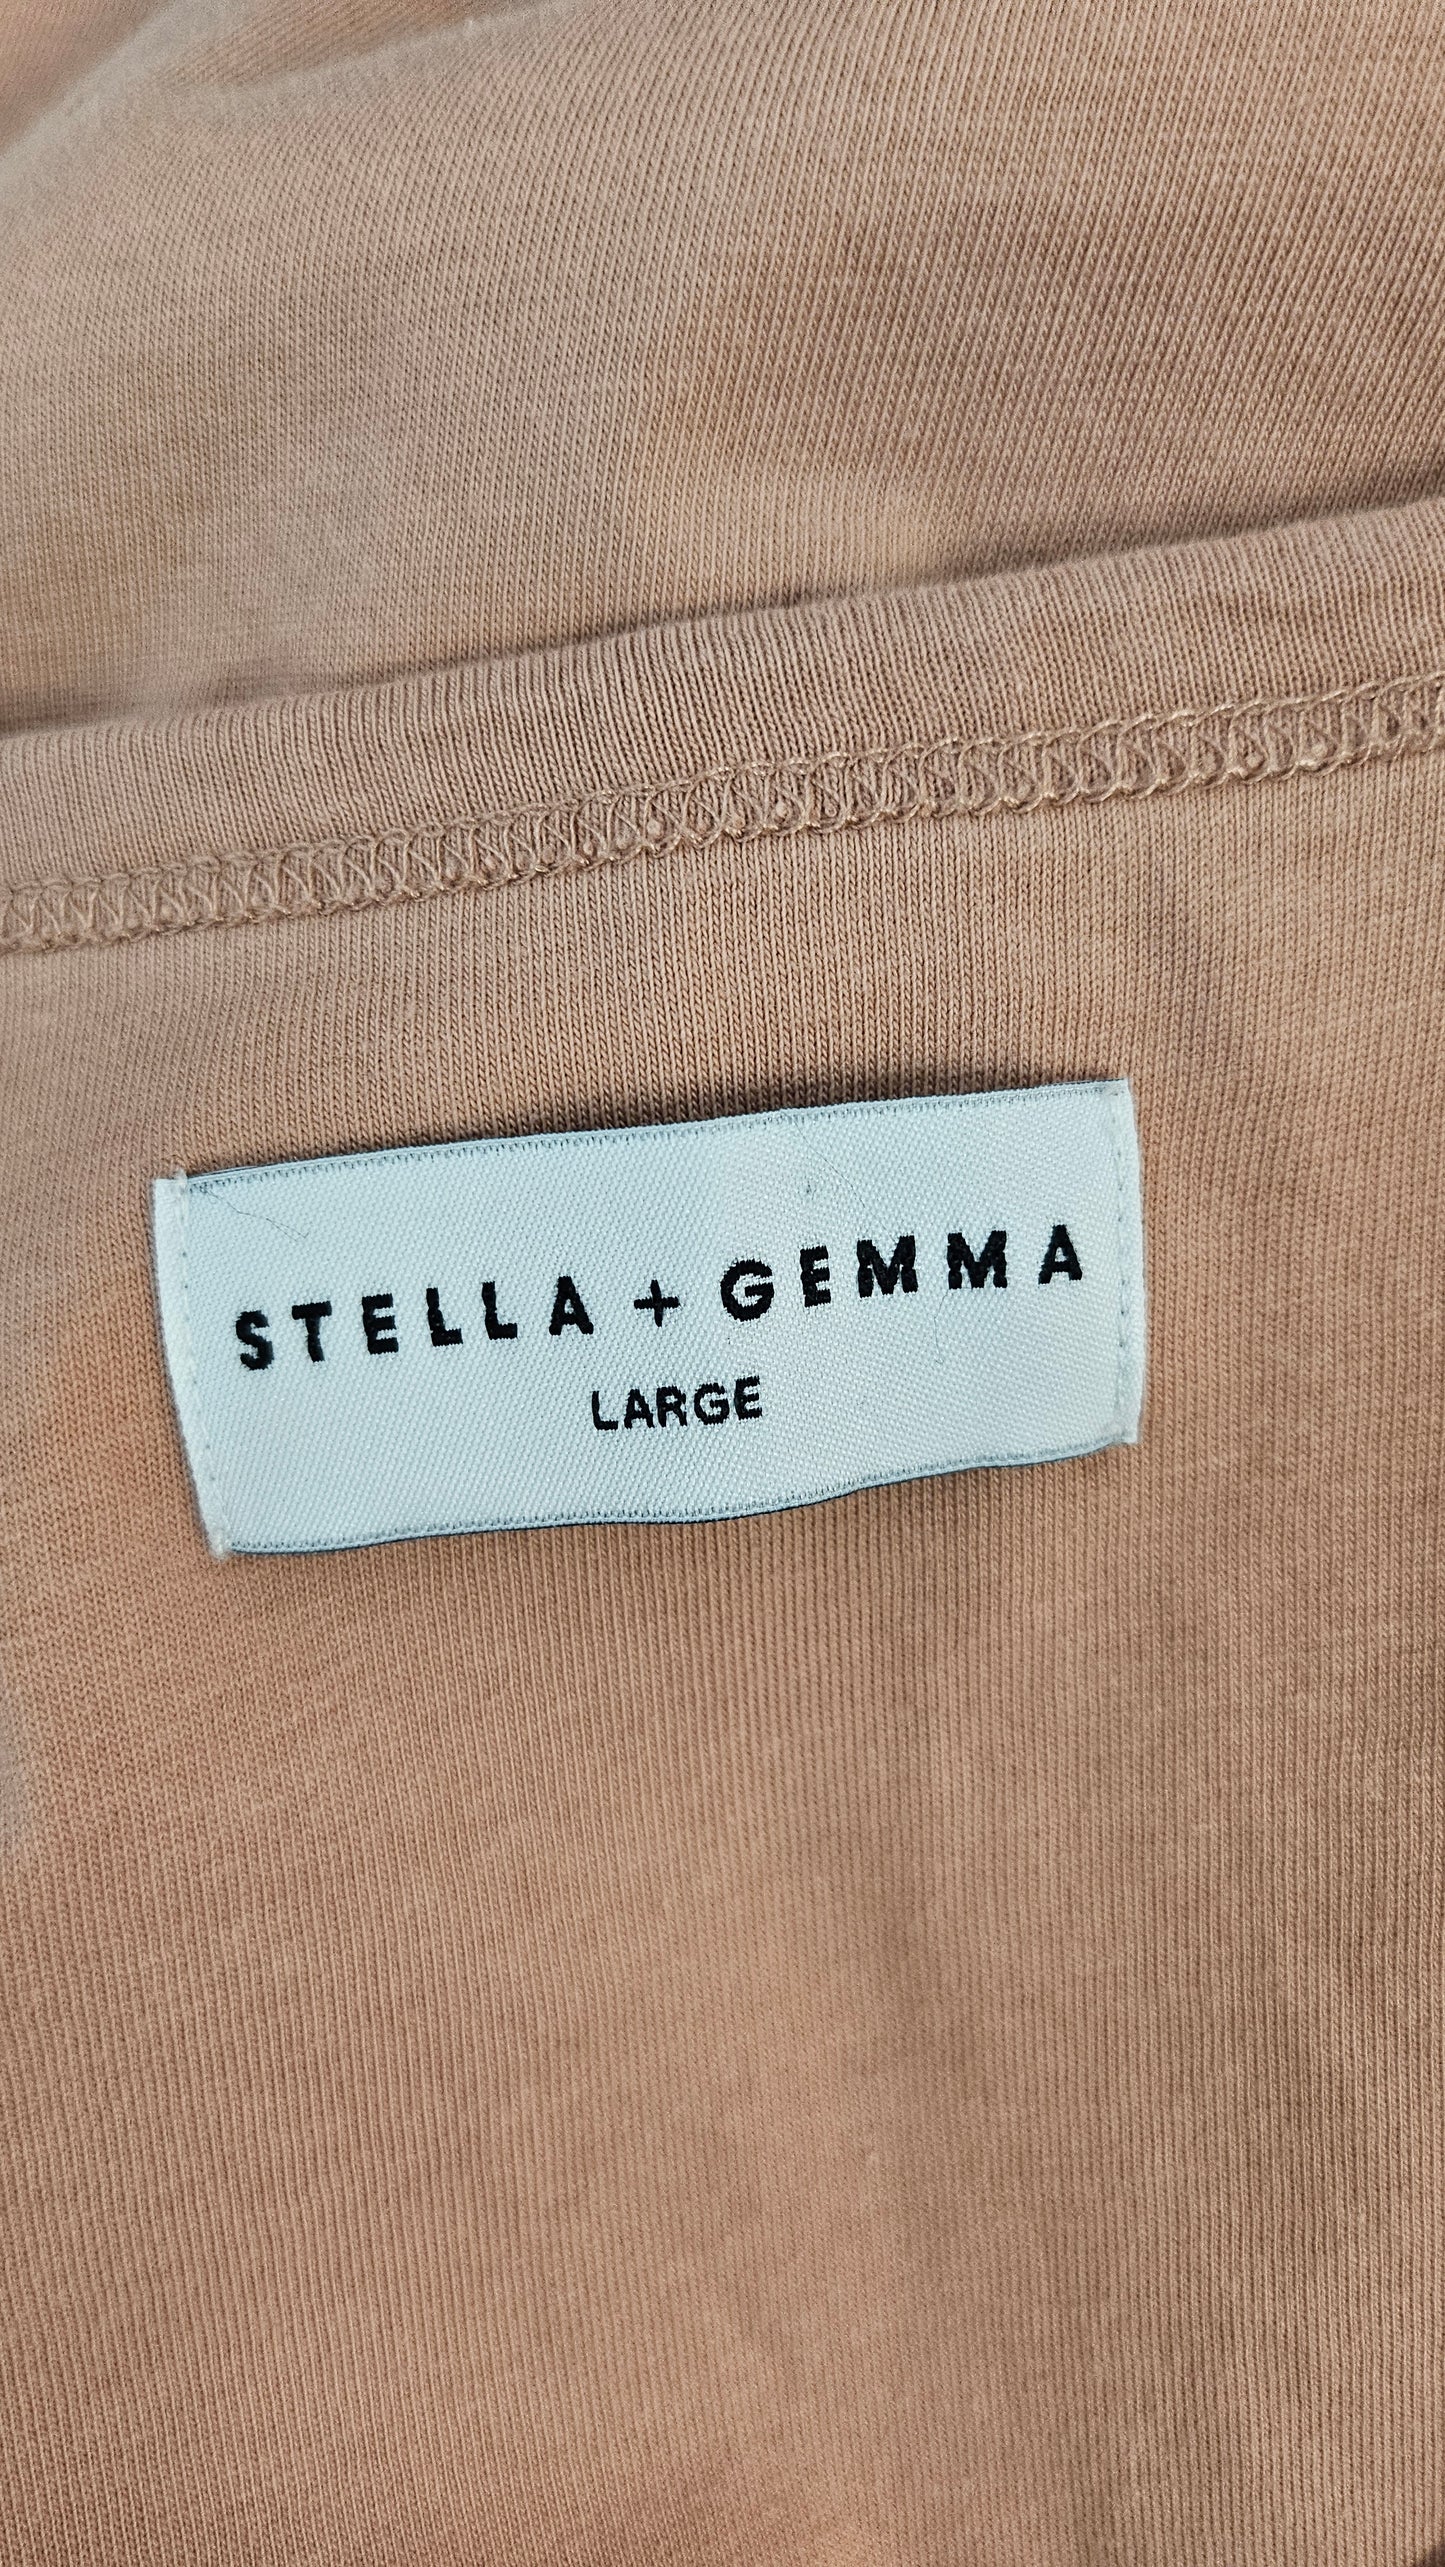 Stella+Gemma Salmon V-Neck Tee (14)